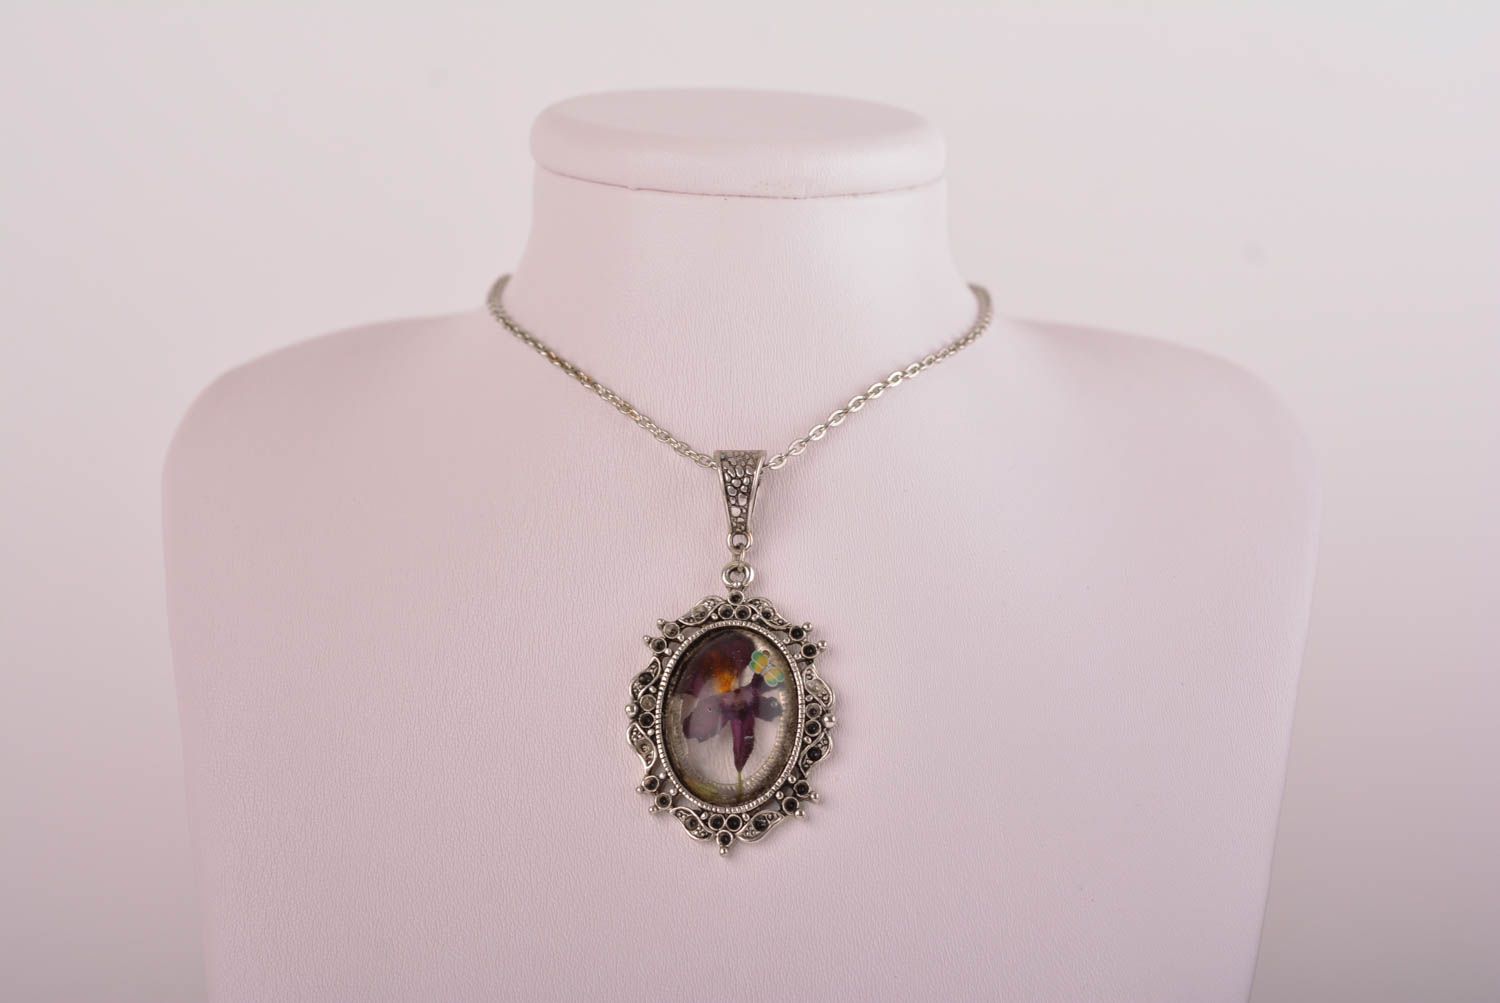 Unusual handmade neck pendant fashion accessories trendy jewelry designs photo 3